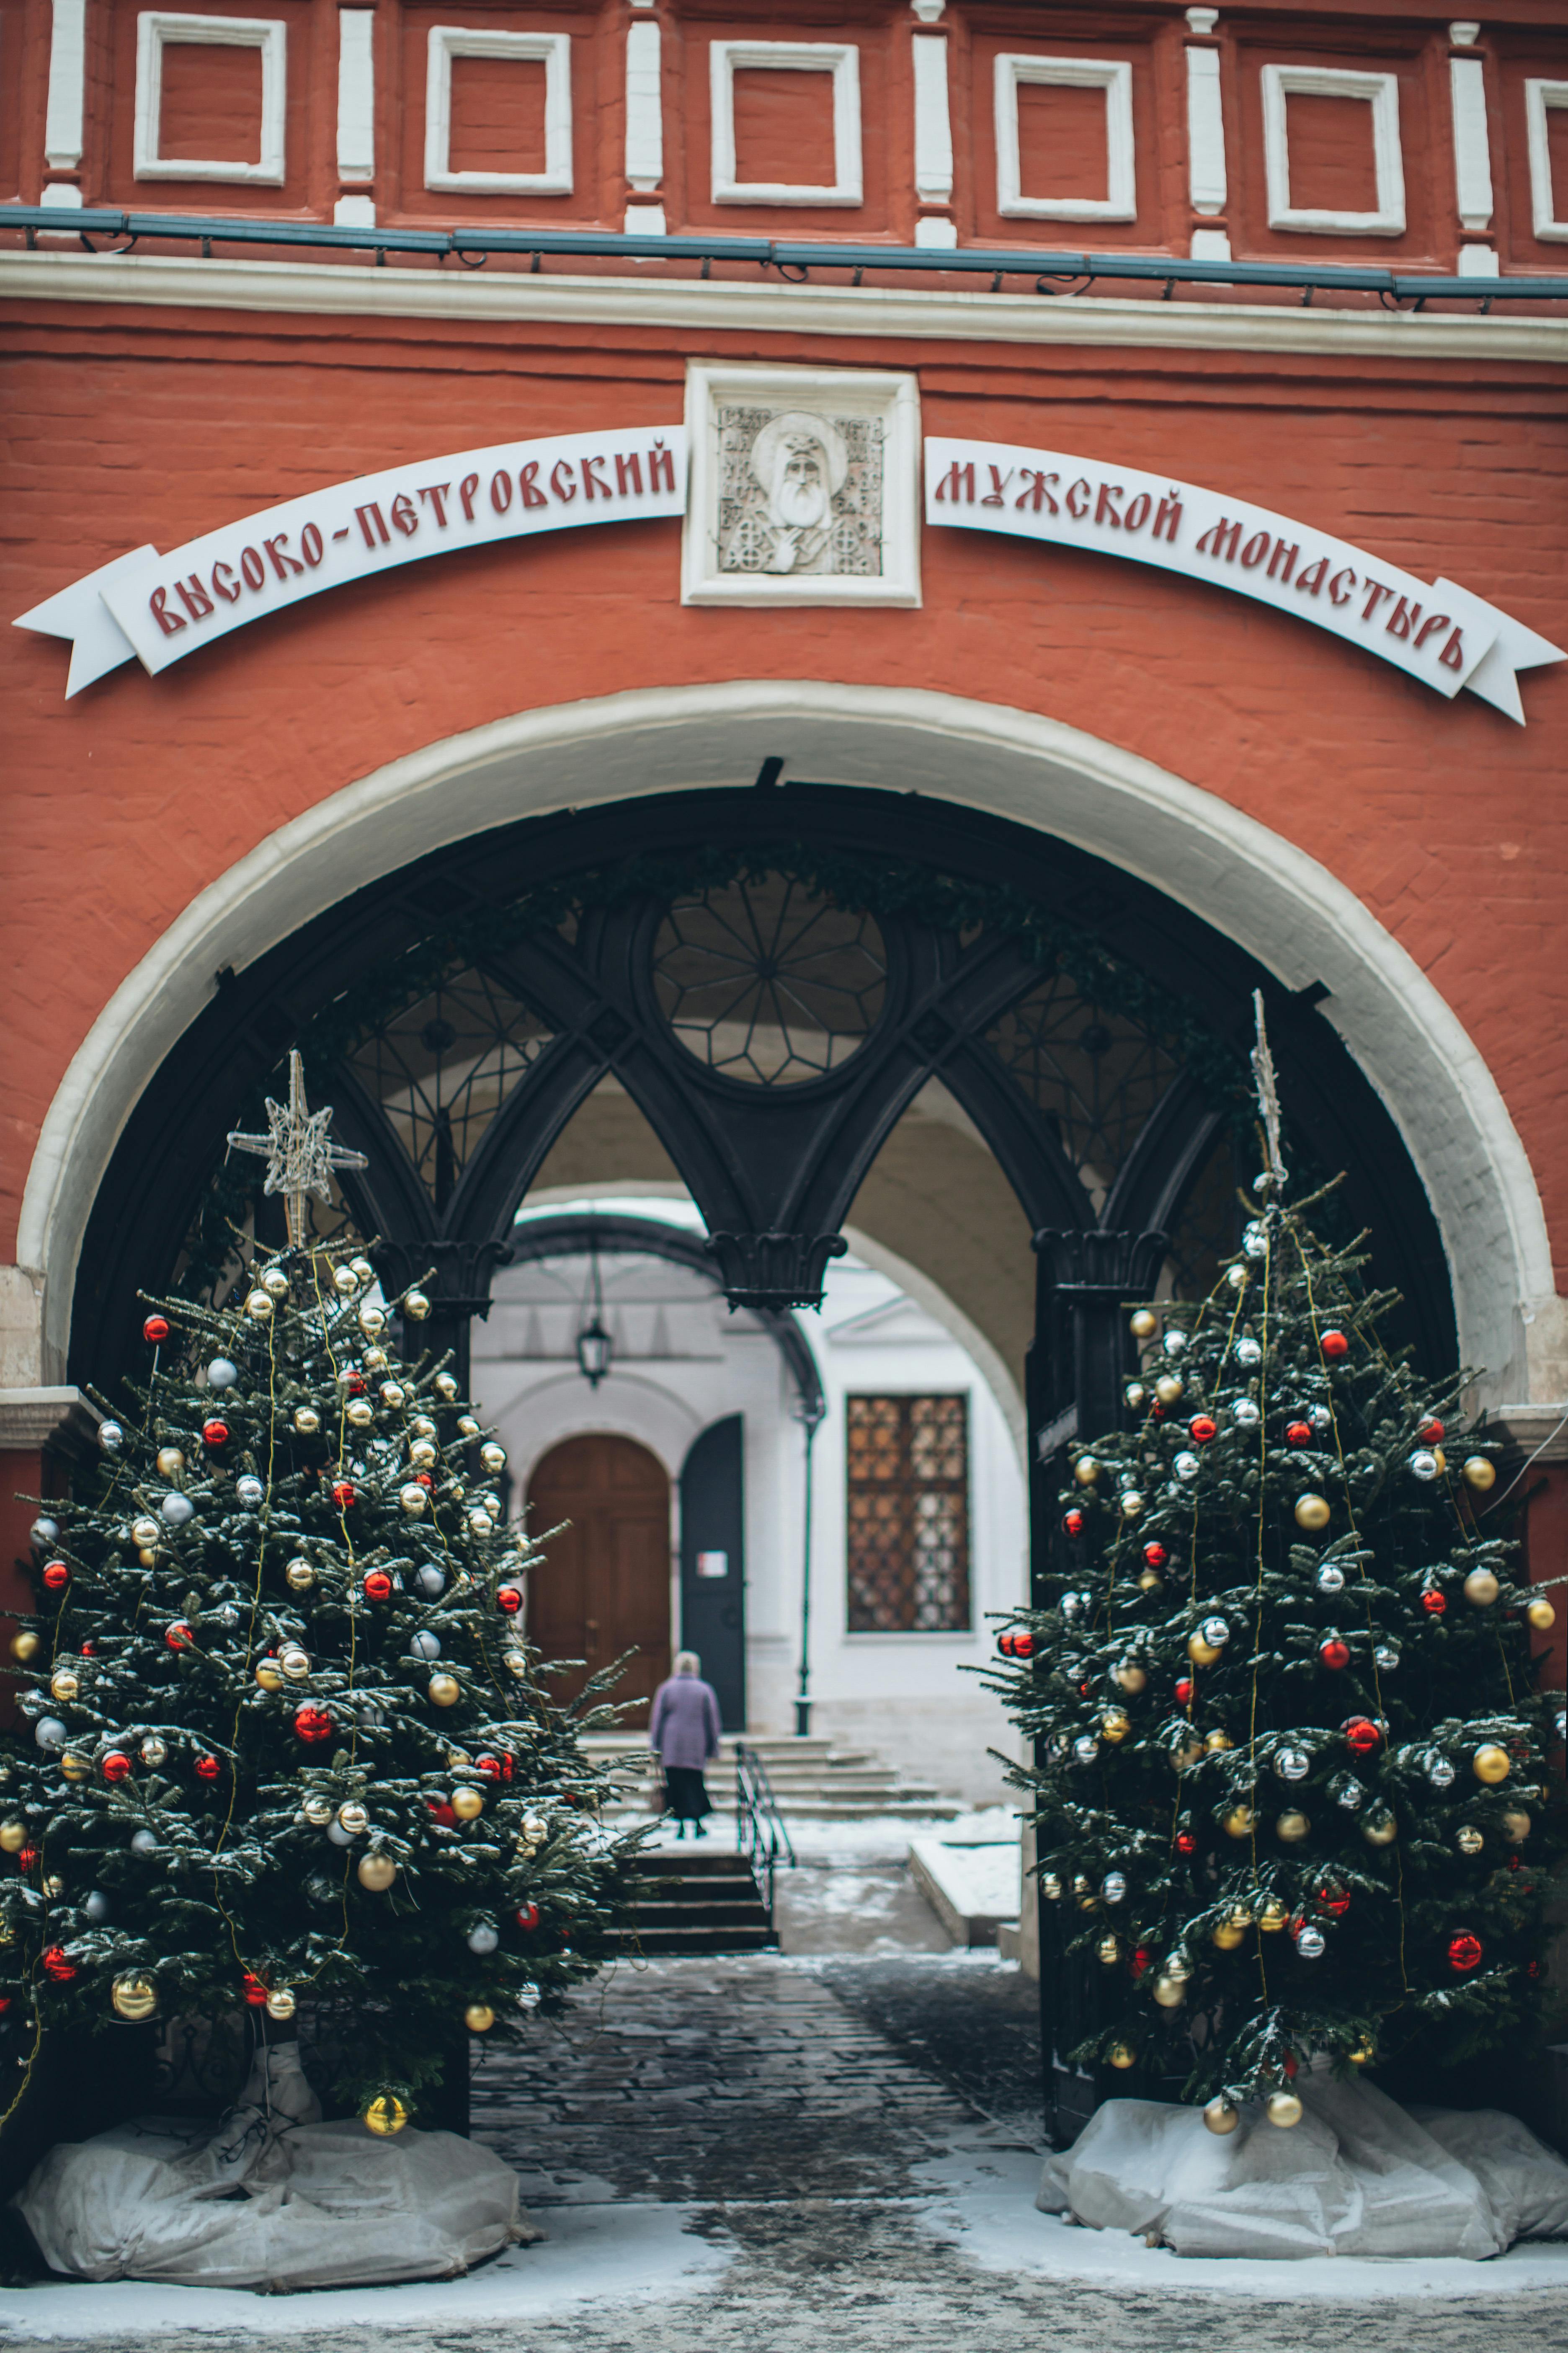 Old church facade with Christmas trees near arch entrance